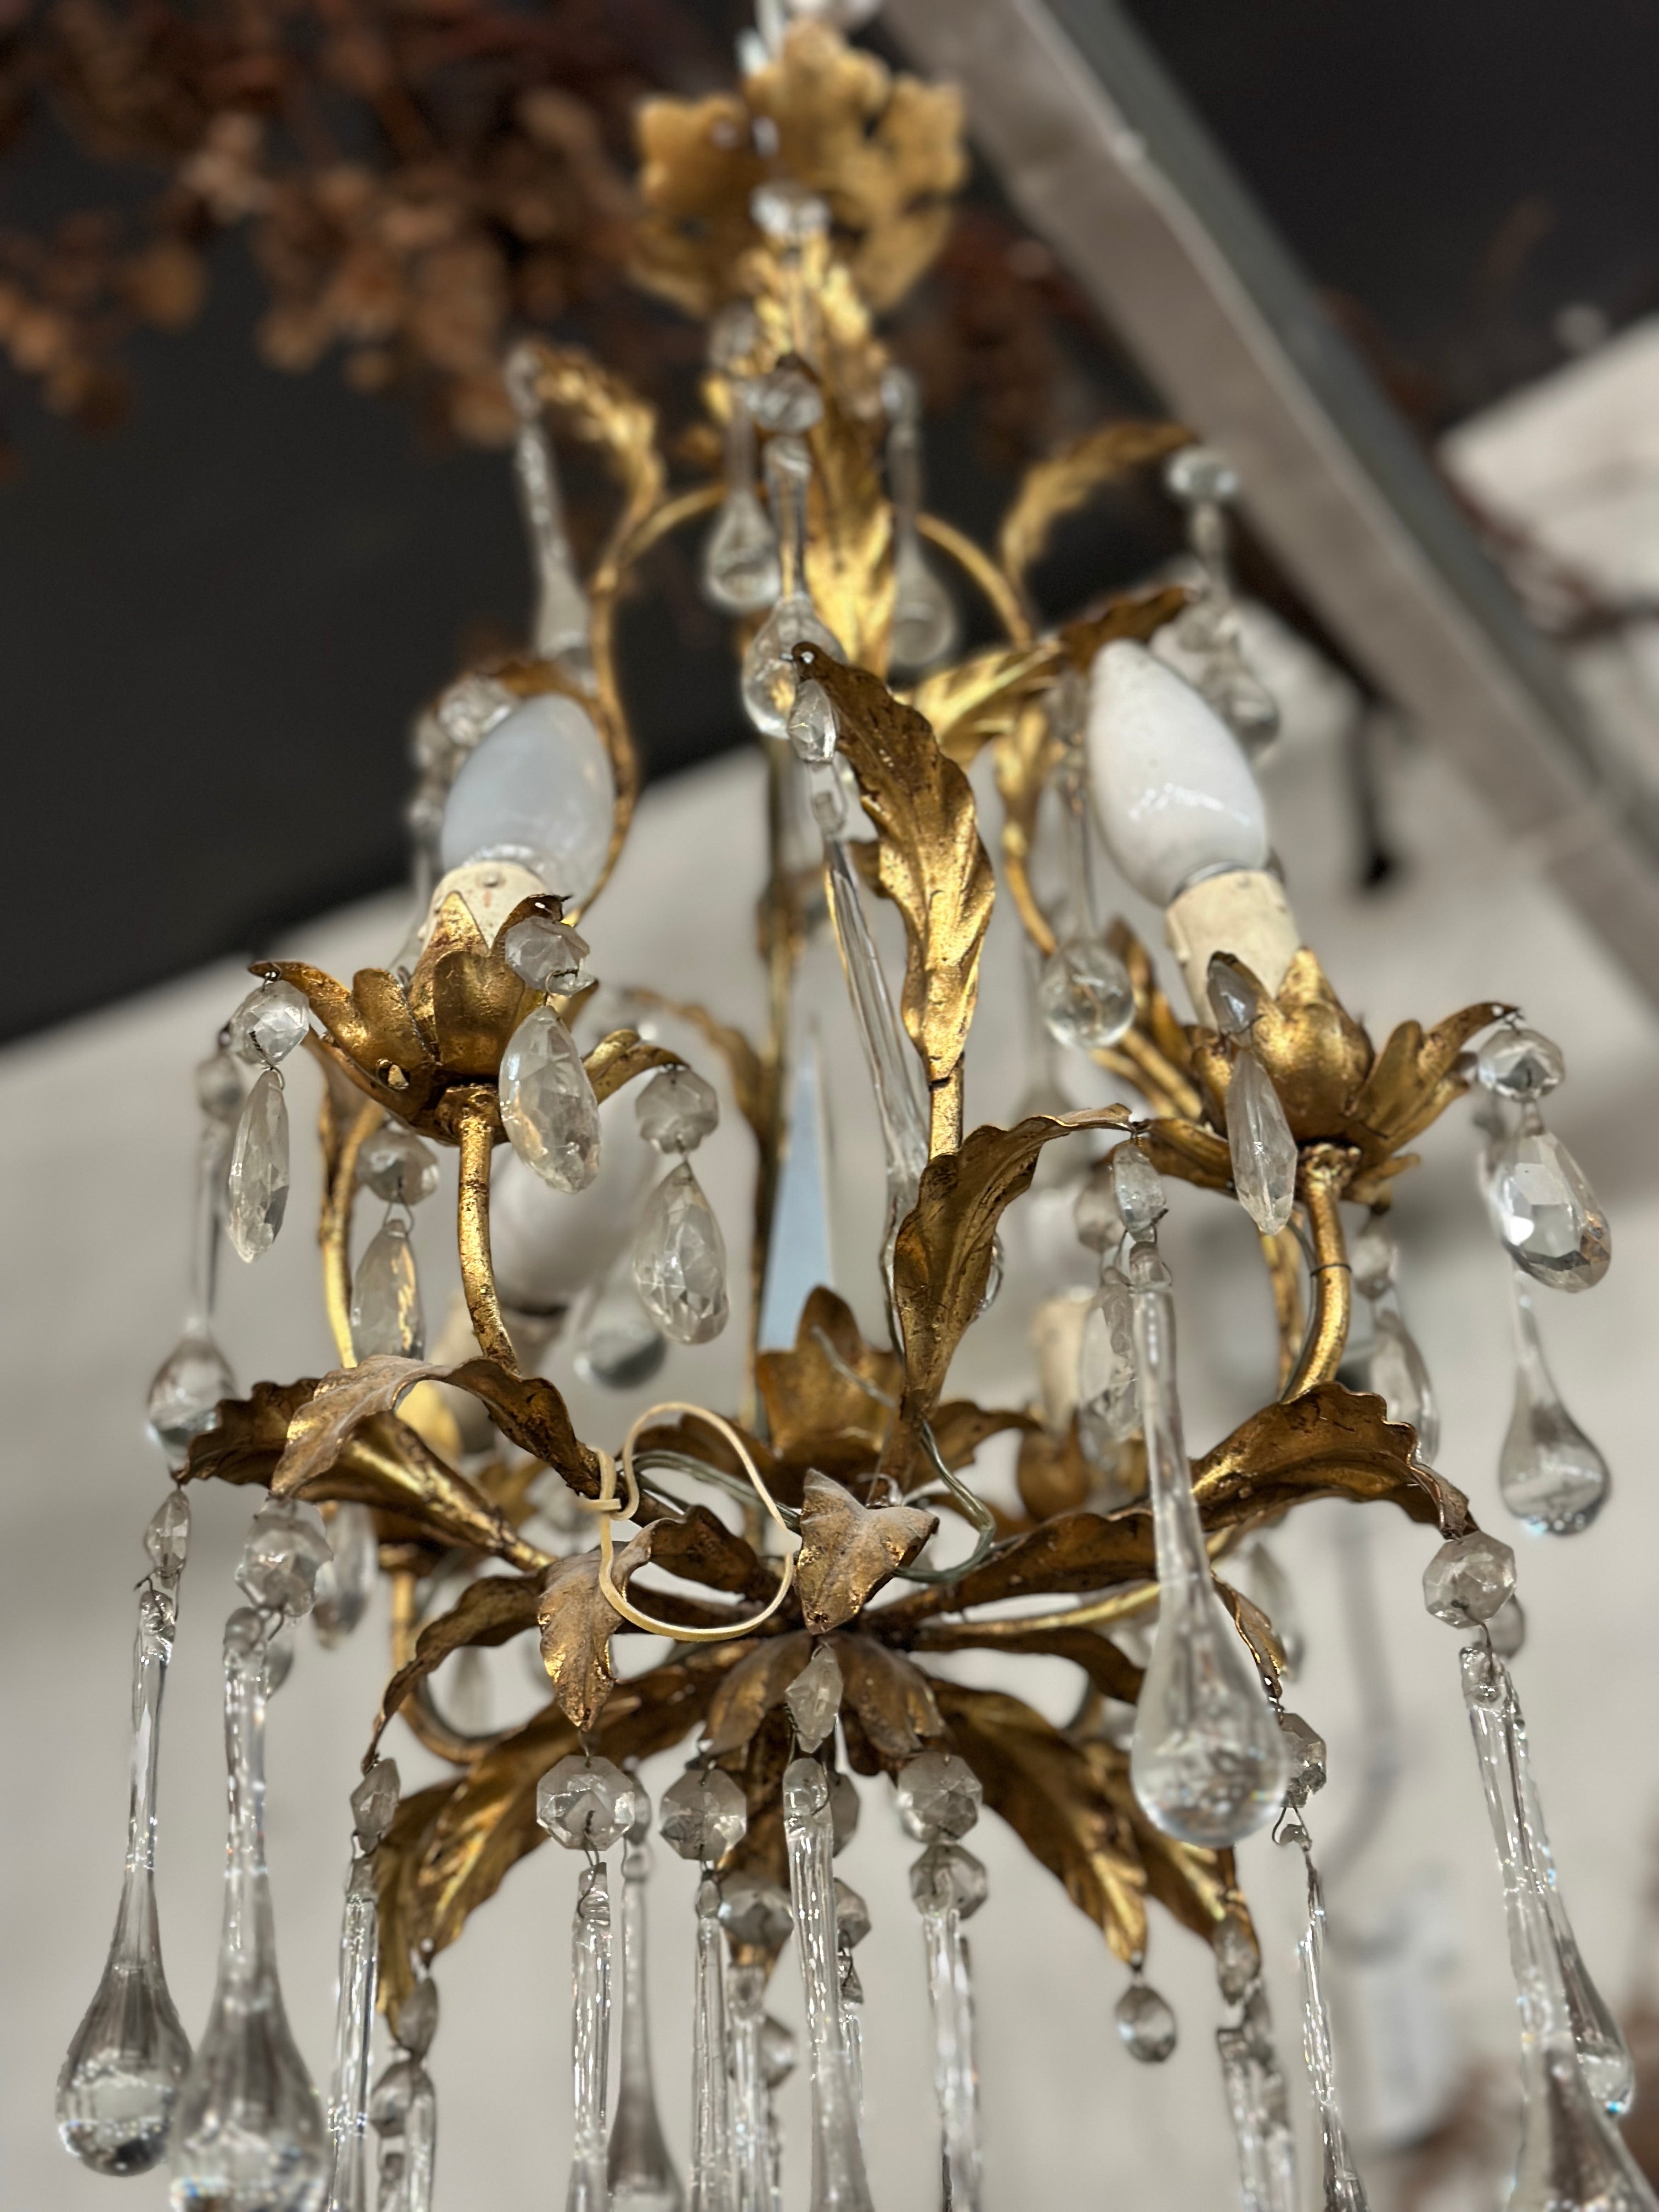 Pretty chandelier